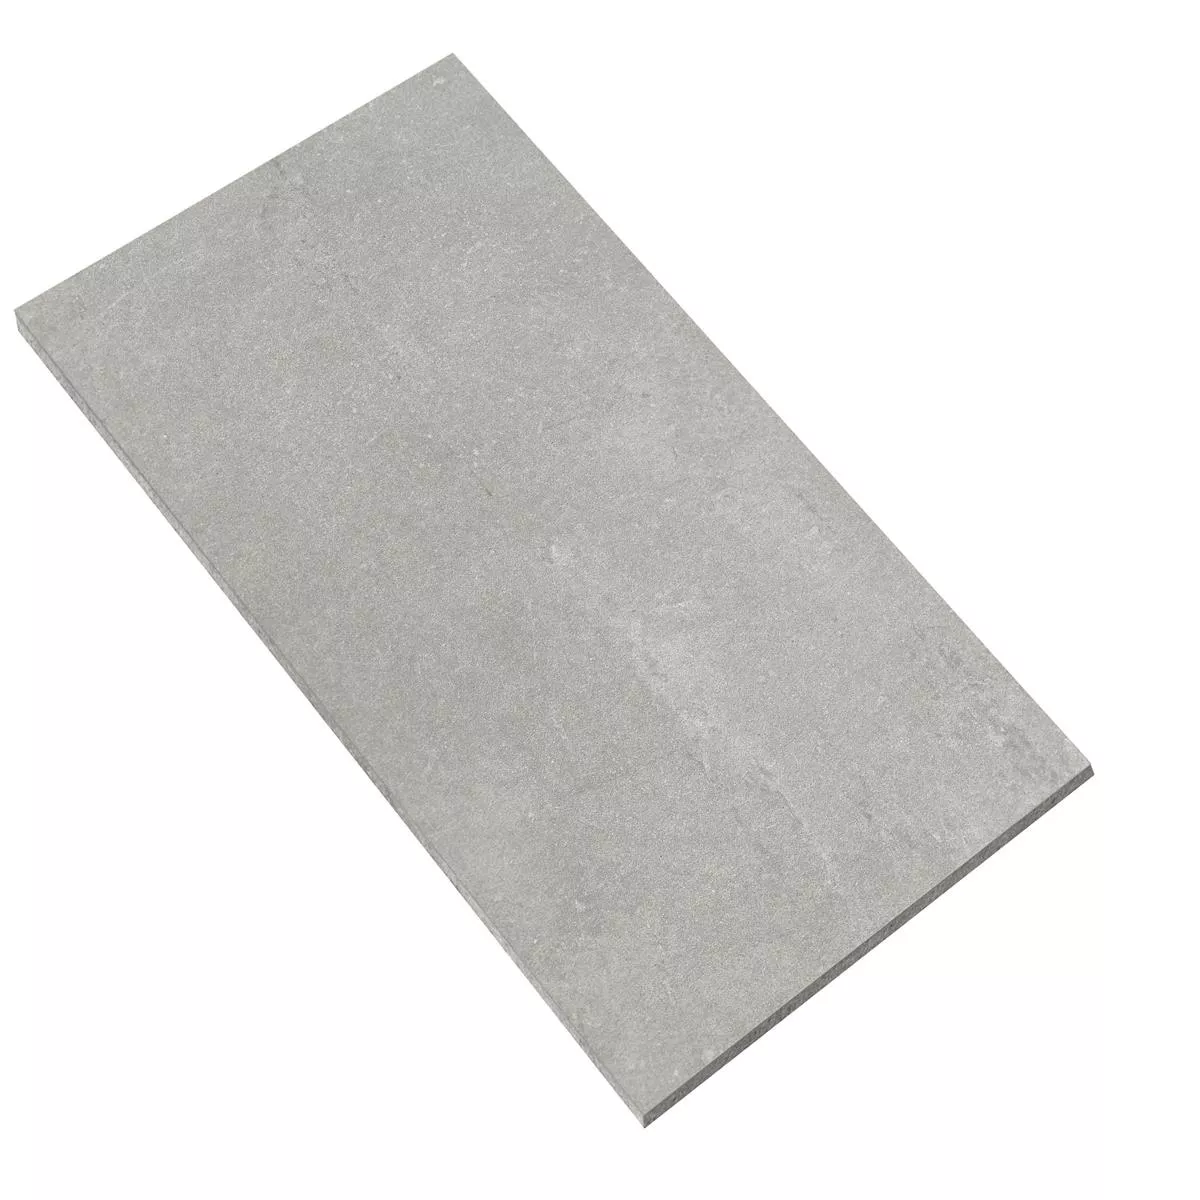 Sample Floor Tiles Cement Optic Nepal Slim Grey 50x100cm